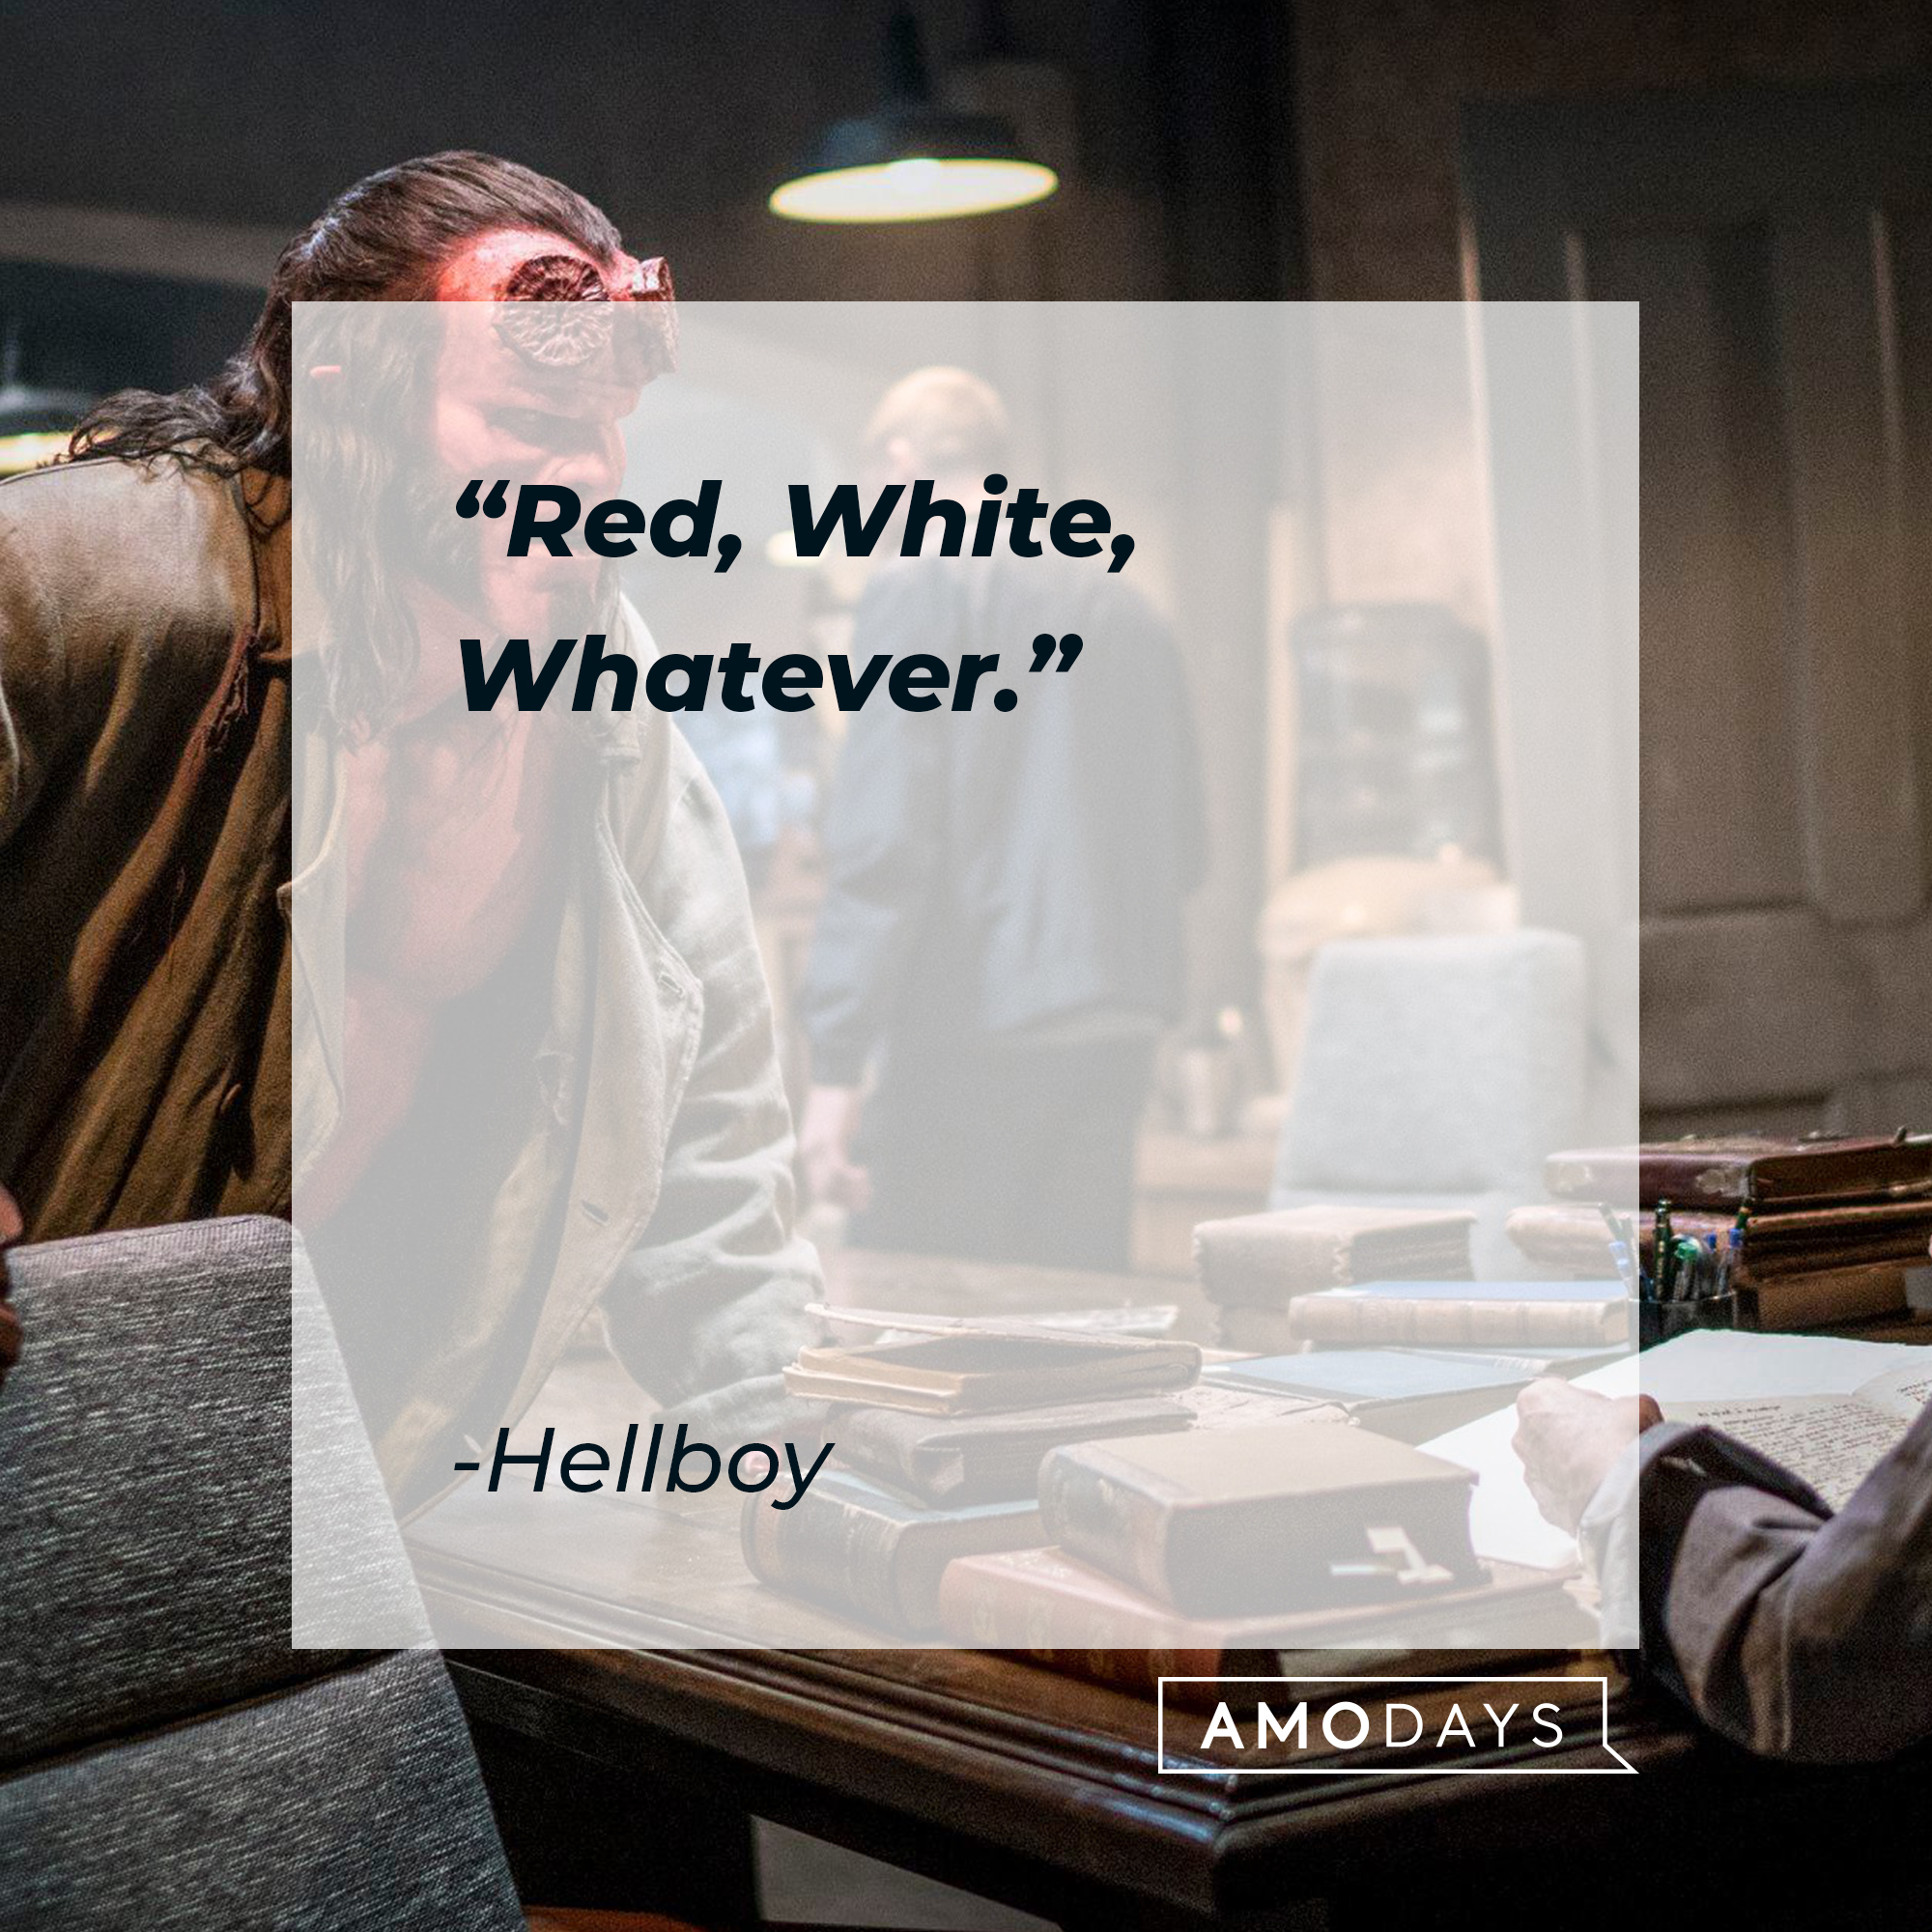 Hellboy's quote: "Red, White, Whatever." | Source: facebook.com/hellboymovie